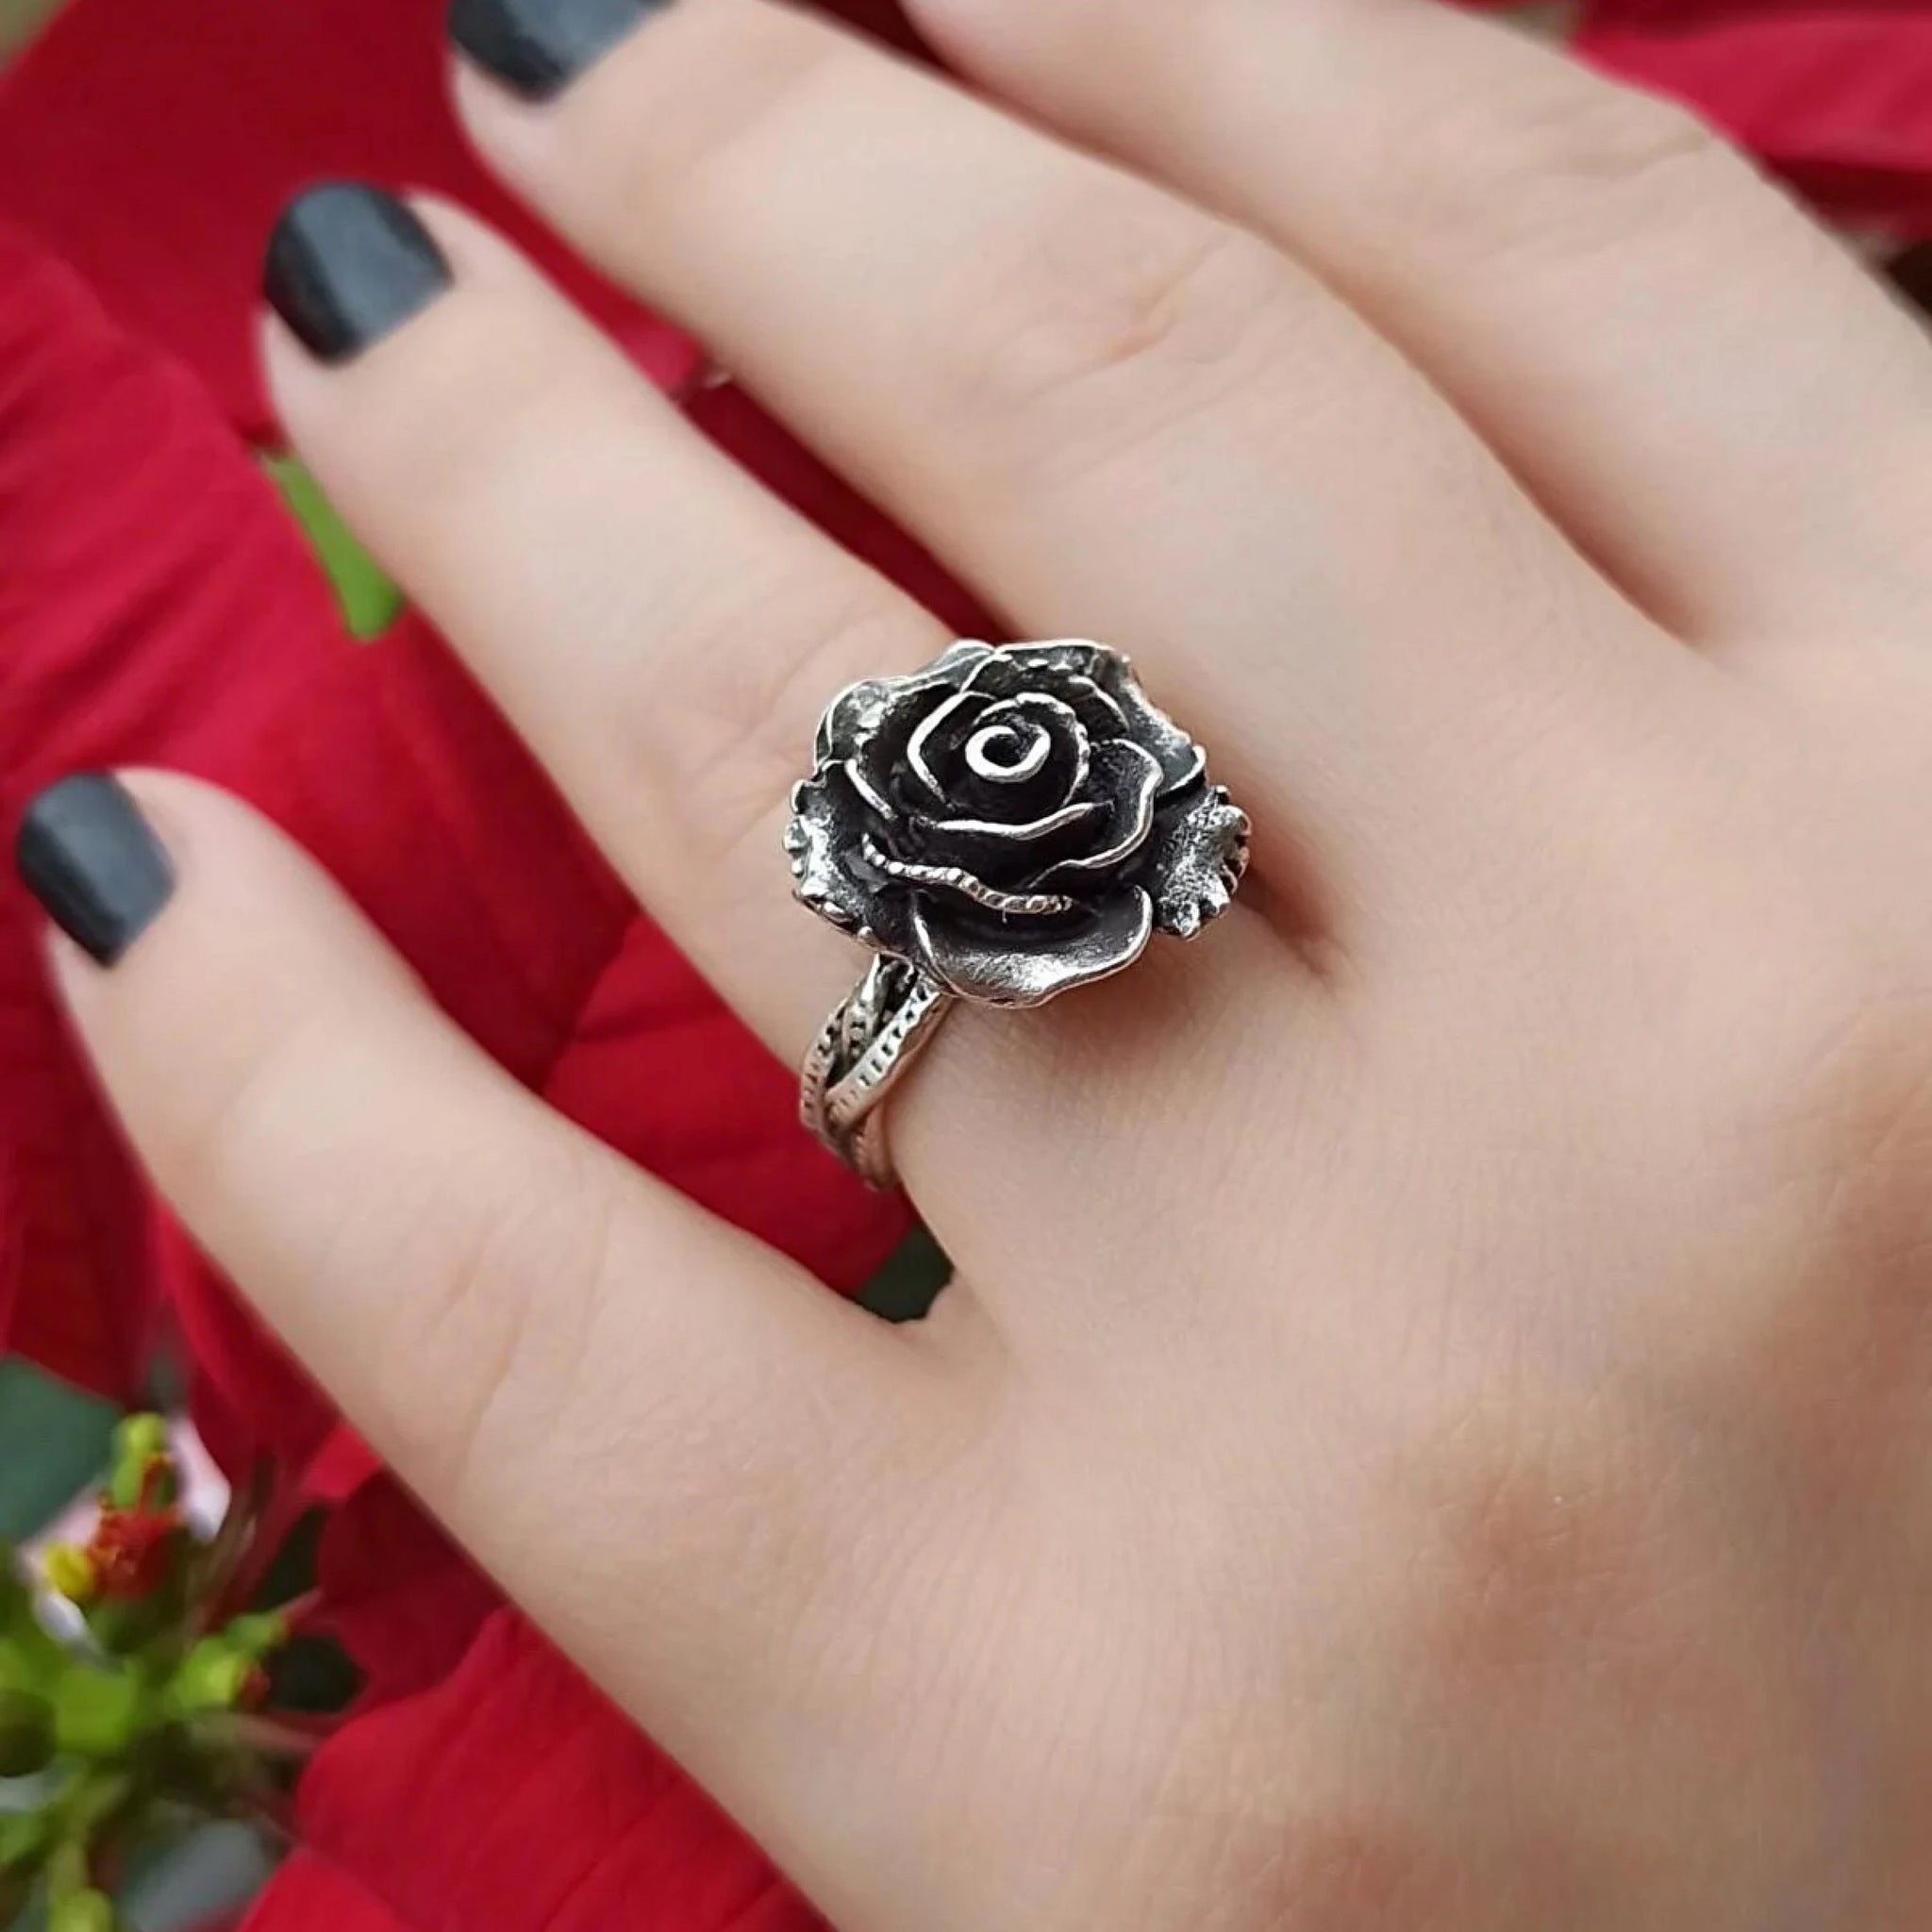 Beast Black Rose Ring - Vintage Flower Ring